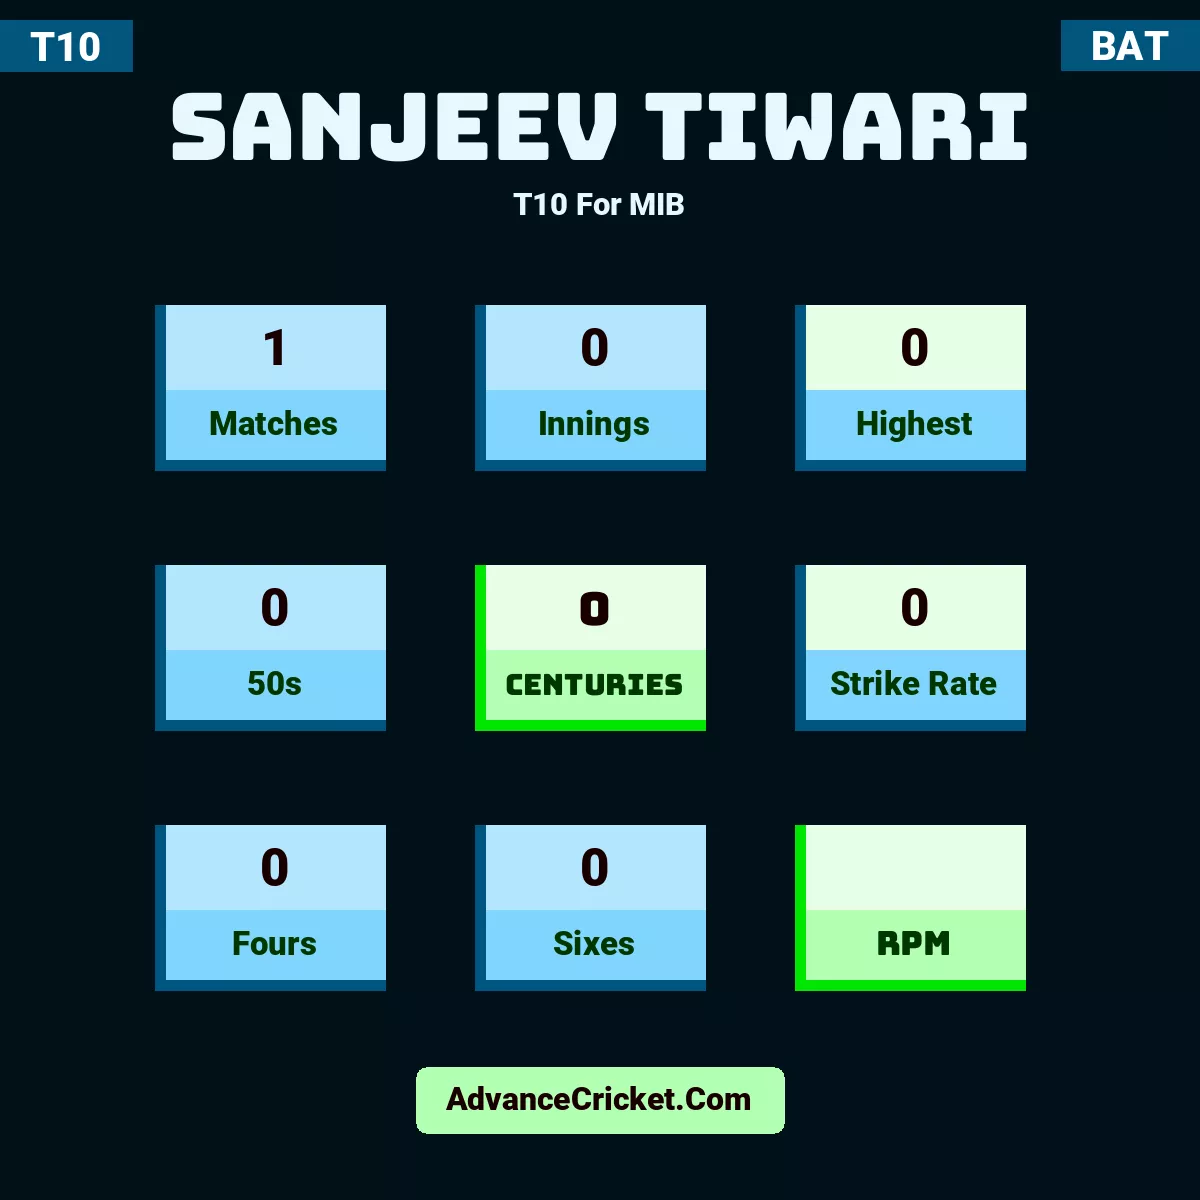 Sanjeev Tiwari T10  For MIB, Sanjeev Tiwari played 1 matches, scored 0 runs as highest, 0 half-centuries, and 0 centuries, with a strike rate of 0. S.Tiwari hit 0 fours and 0 sixes.